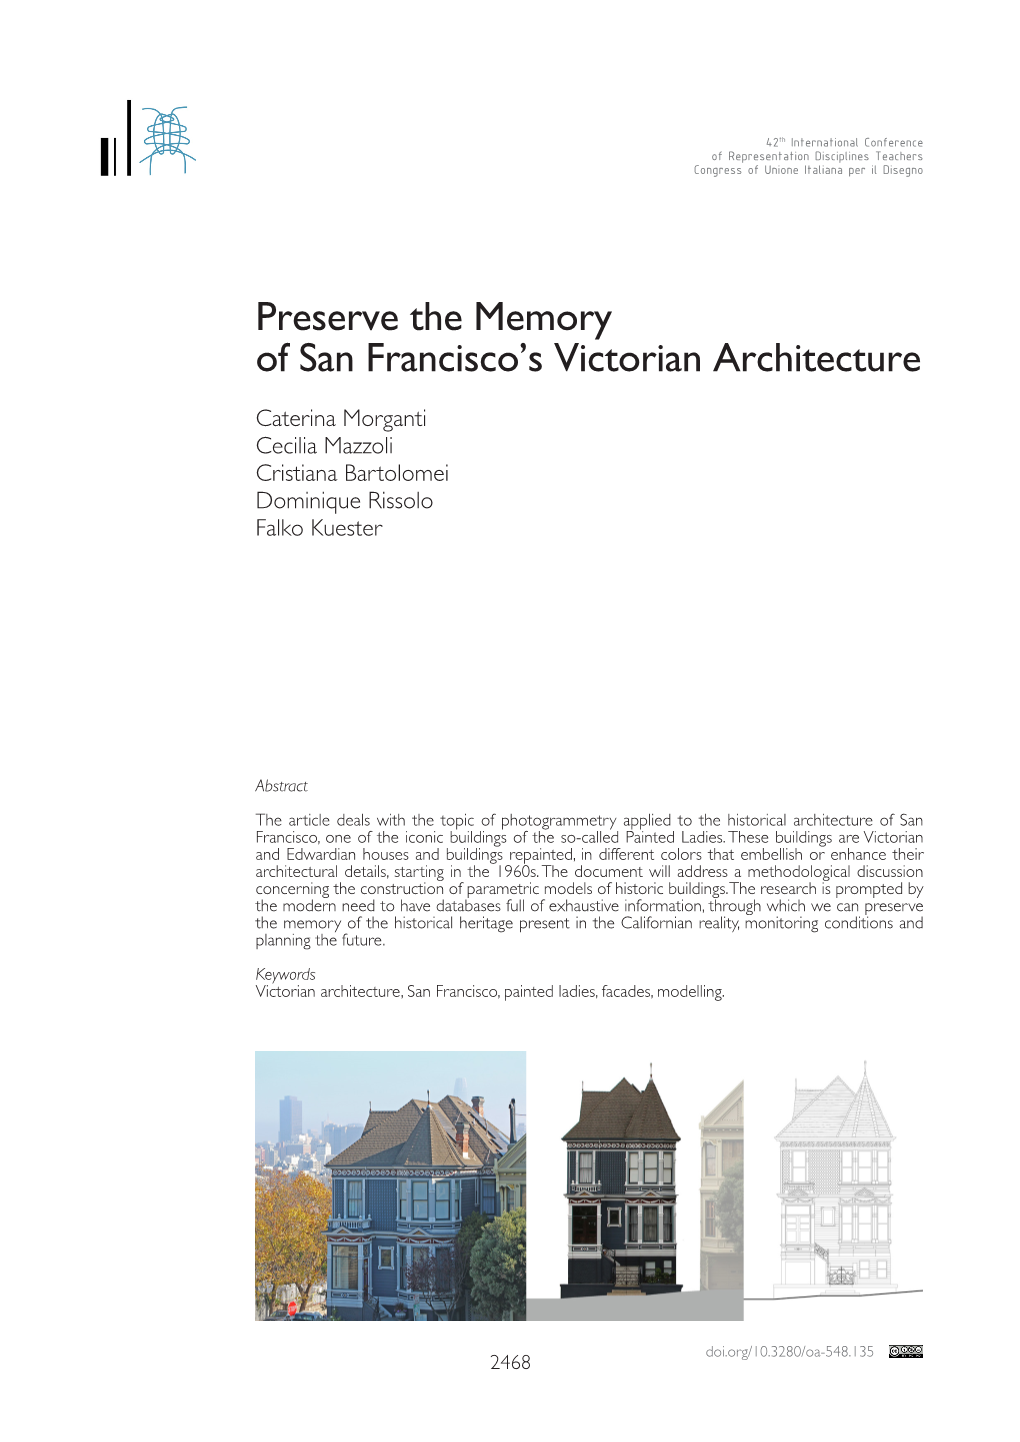 Preserve the Memory of San Francisco's Victorian Architecture